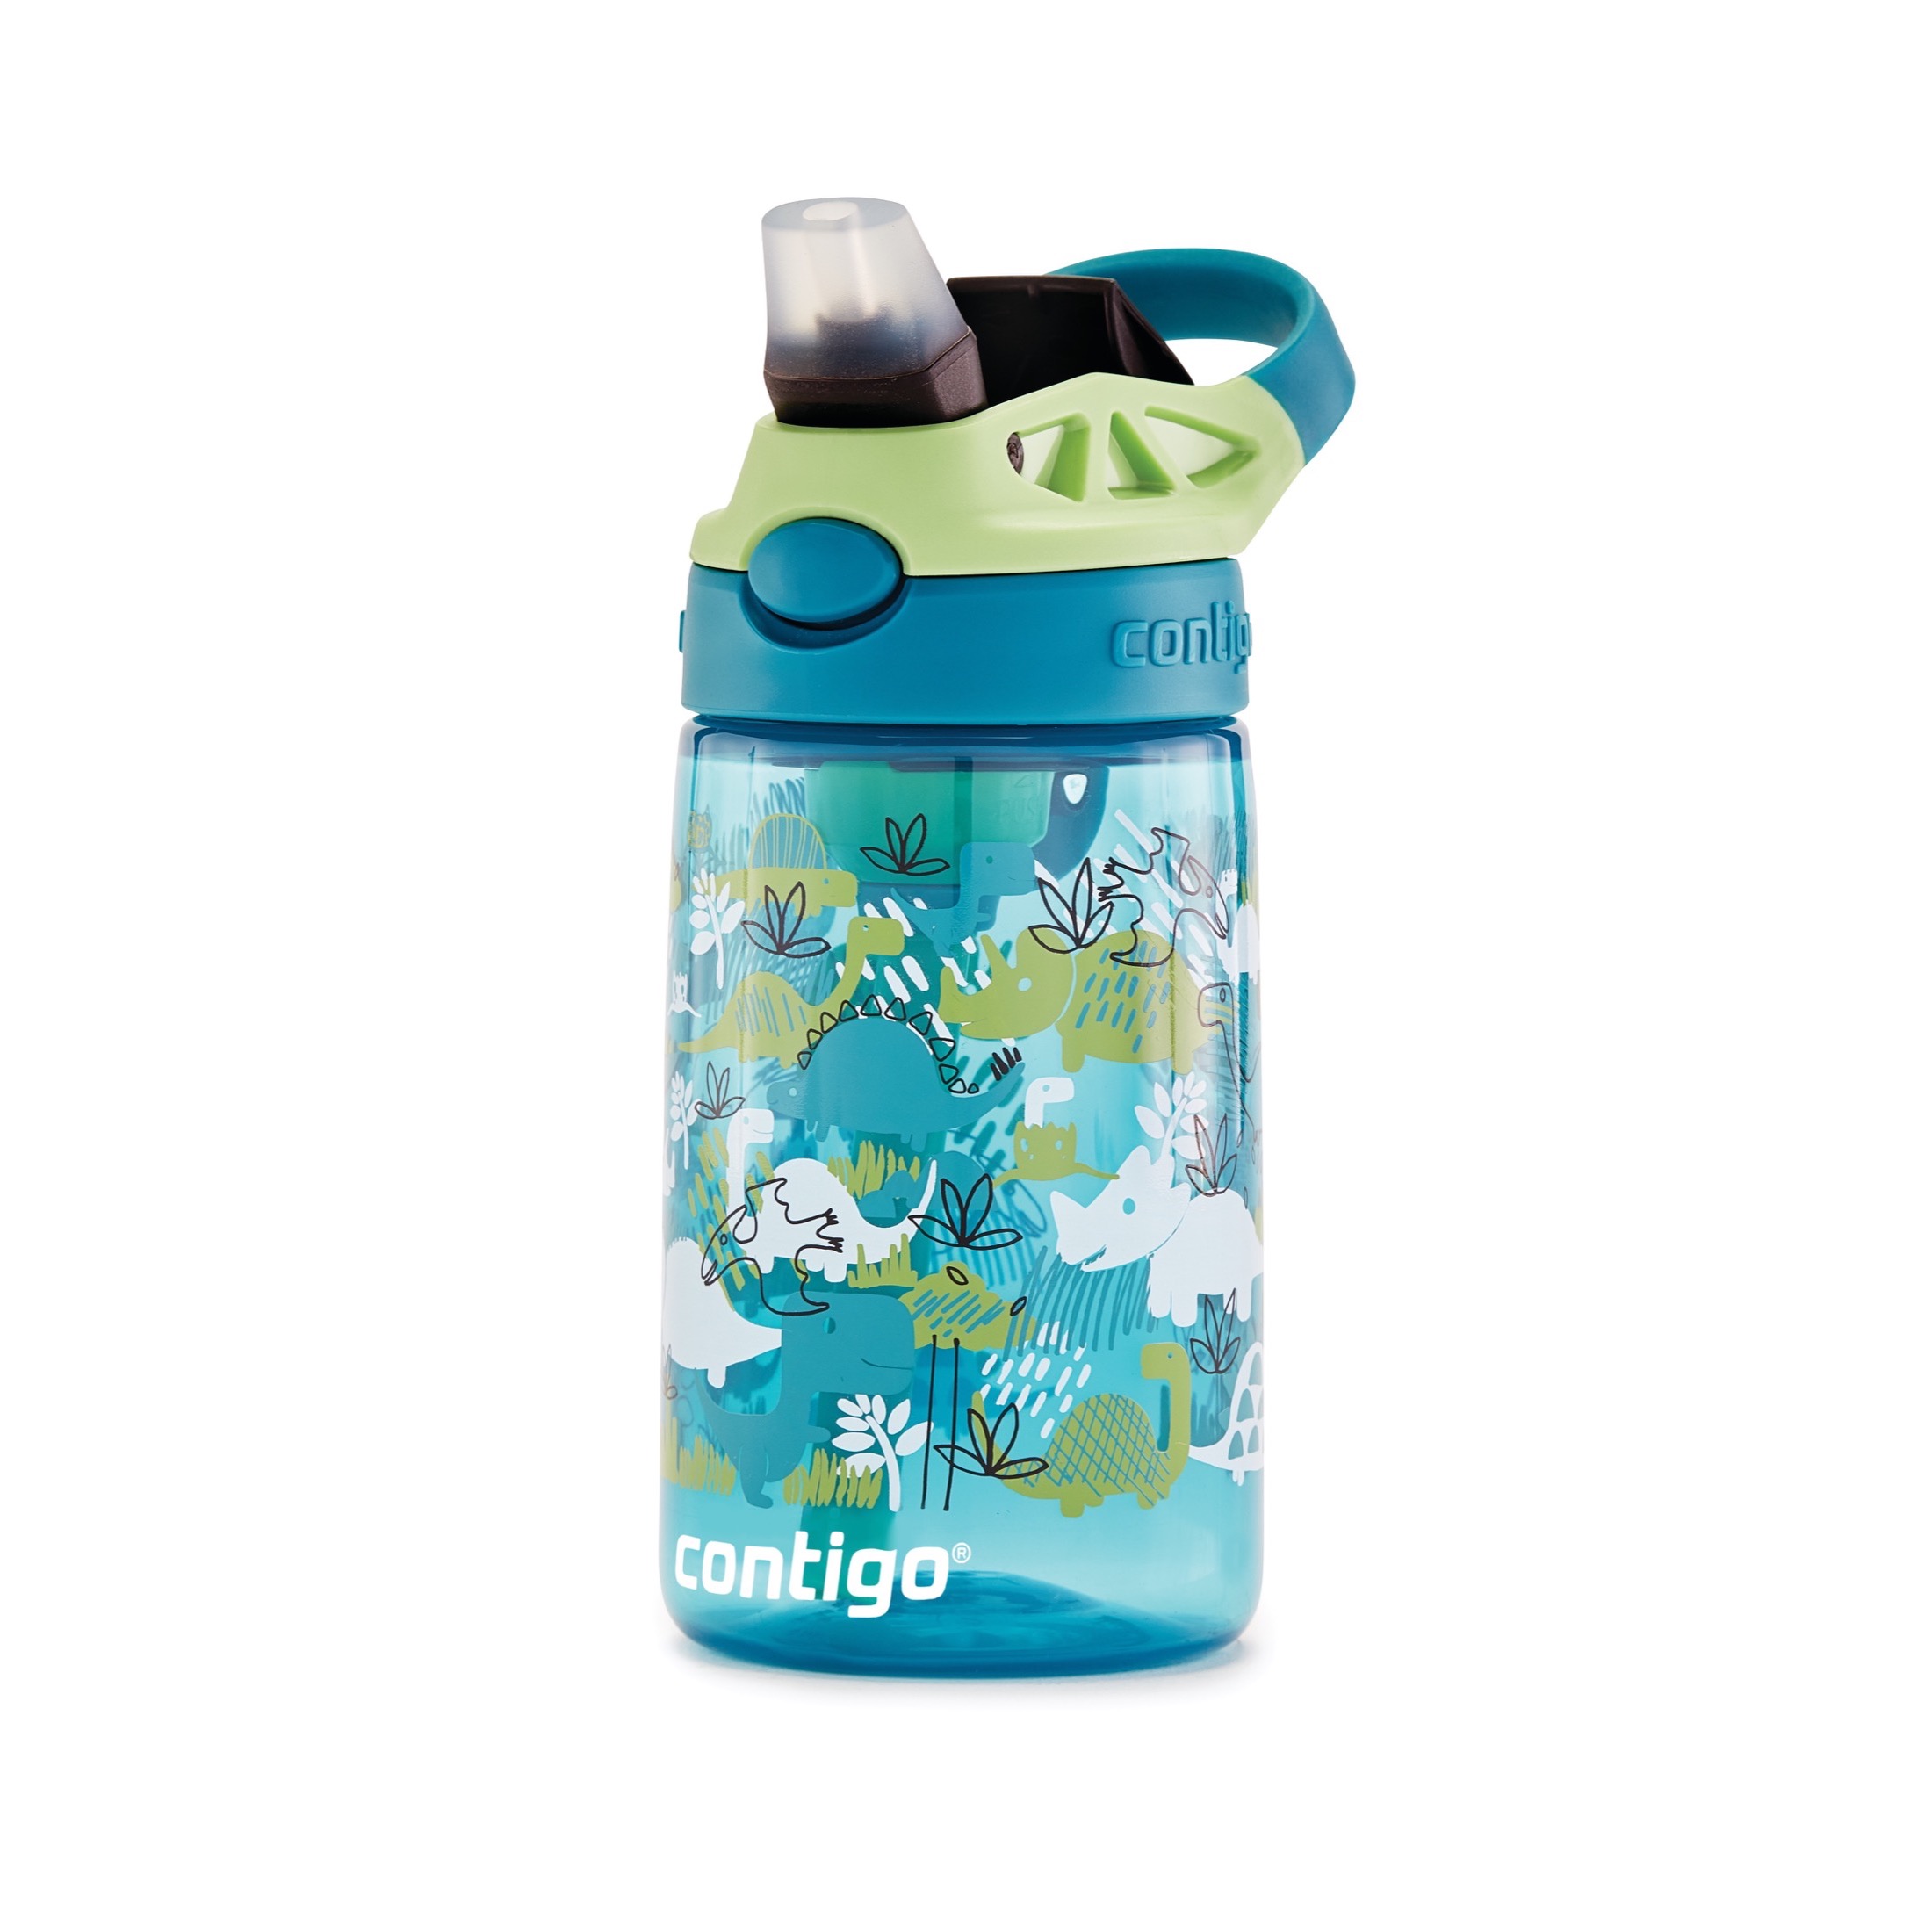 Contigo Kids Water Bottle with Autospout Straw Green & Blue, 14 fl oz. - image 7 of 8